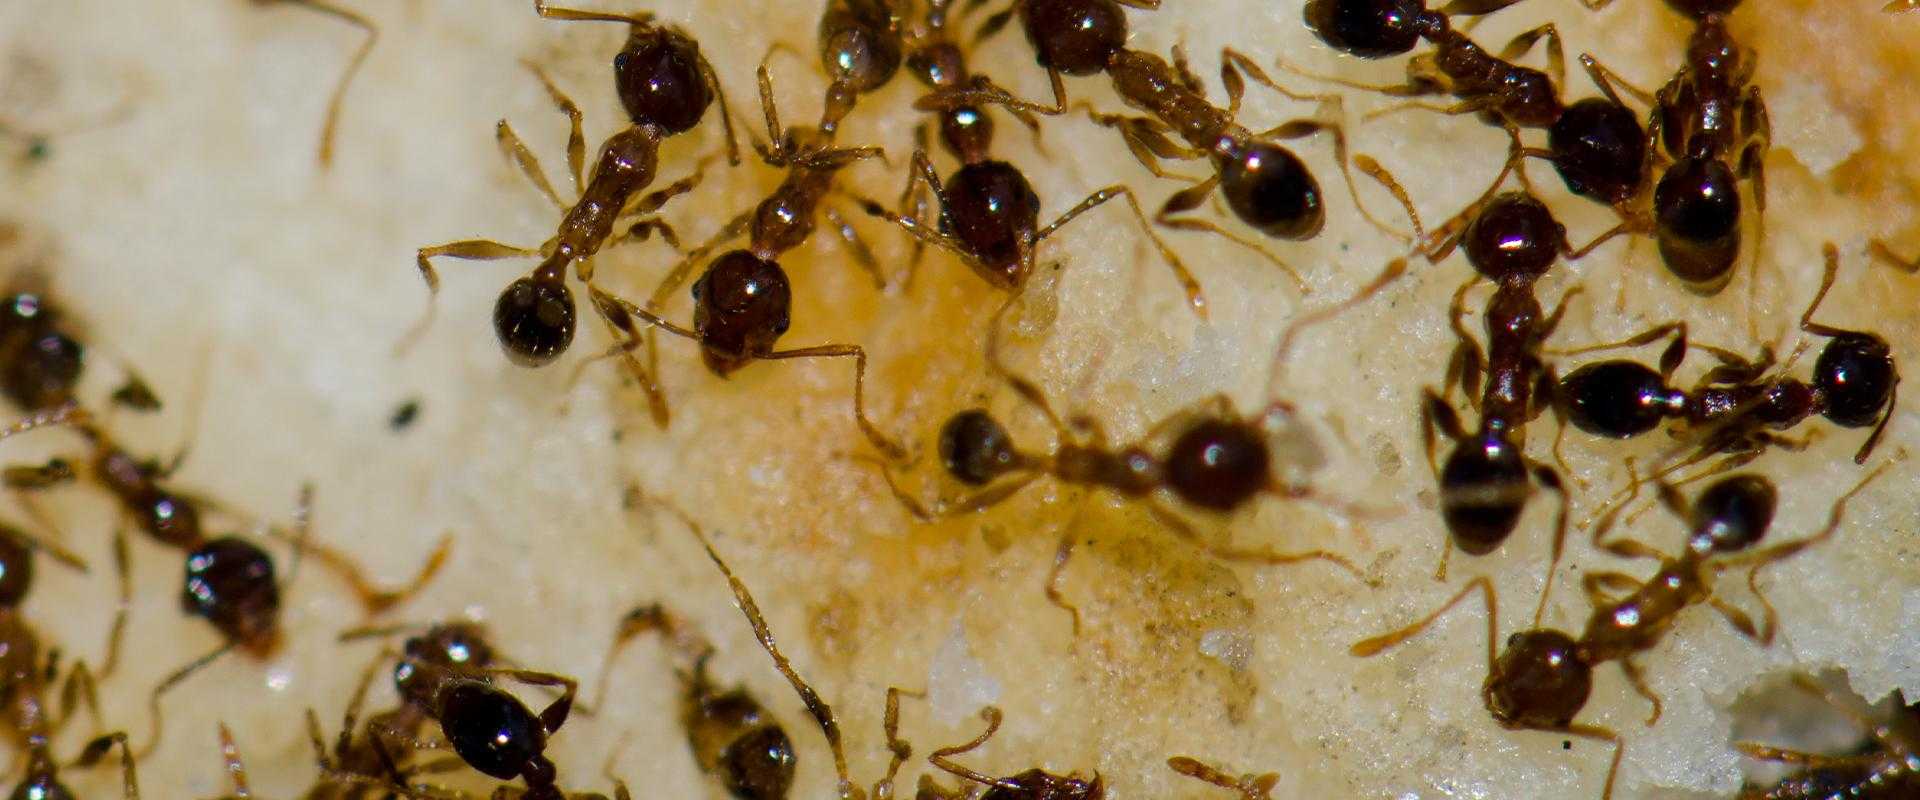 ants on sugar in waldorf maryland